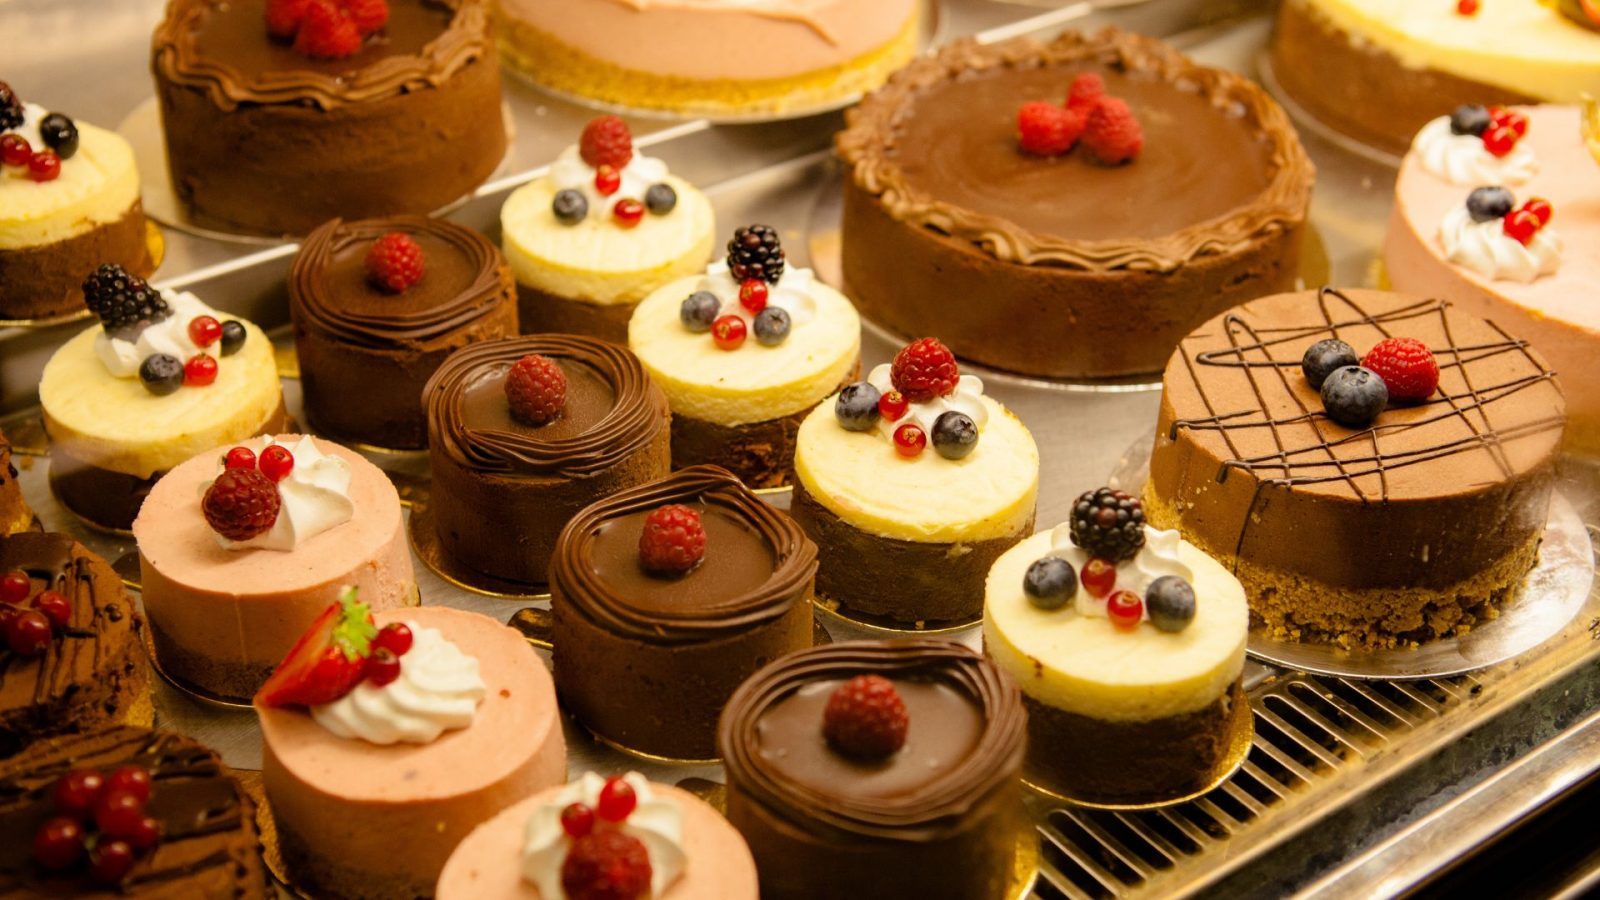 Fnp Cakes 'N' More in New Alipore,Kolkata - Best Cake Shops in Kolkata -  Justdial